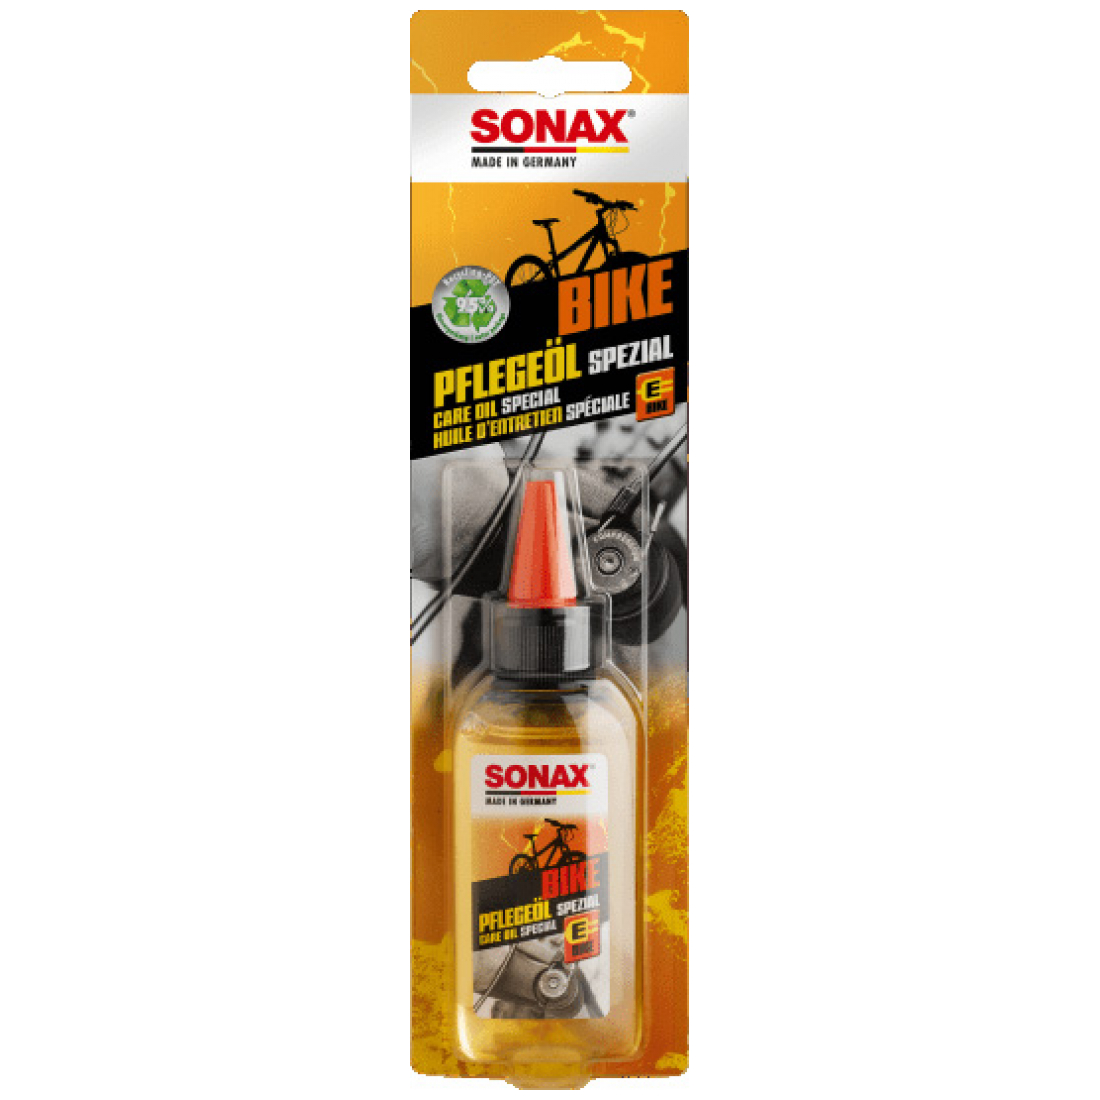 SONAX Bike Pflegeöl Spezial 50ml 08575410